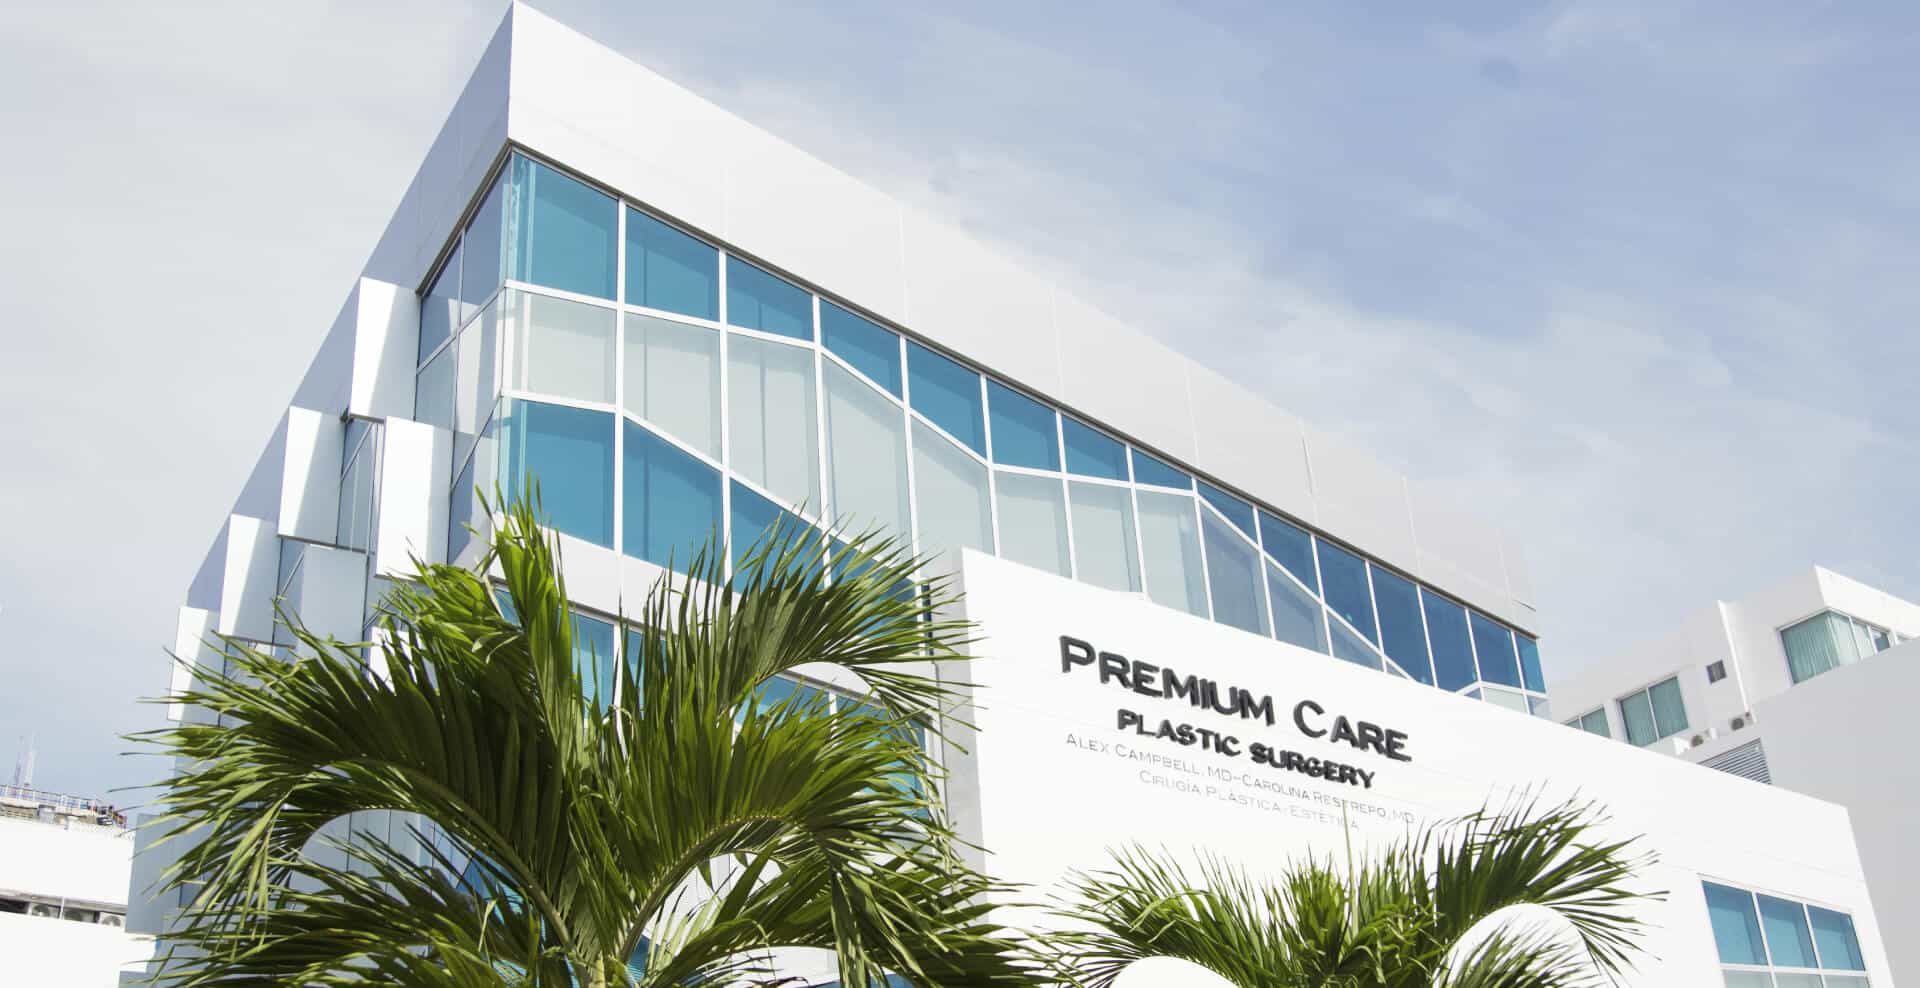 Premium Care Plastic Surgery Colombia